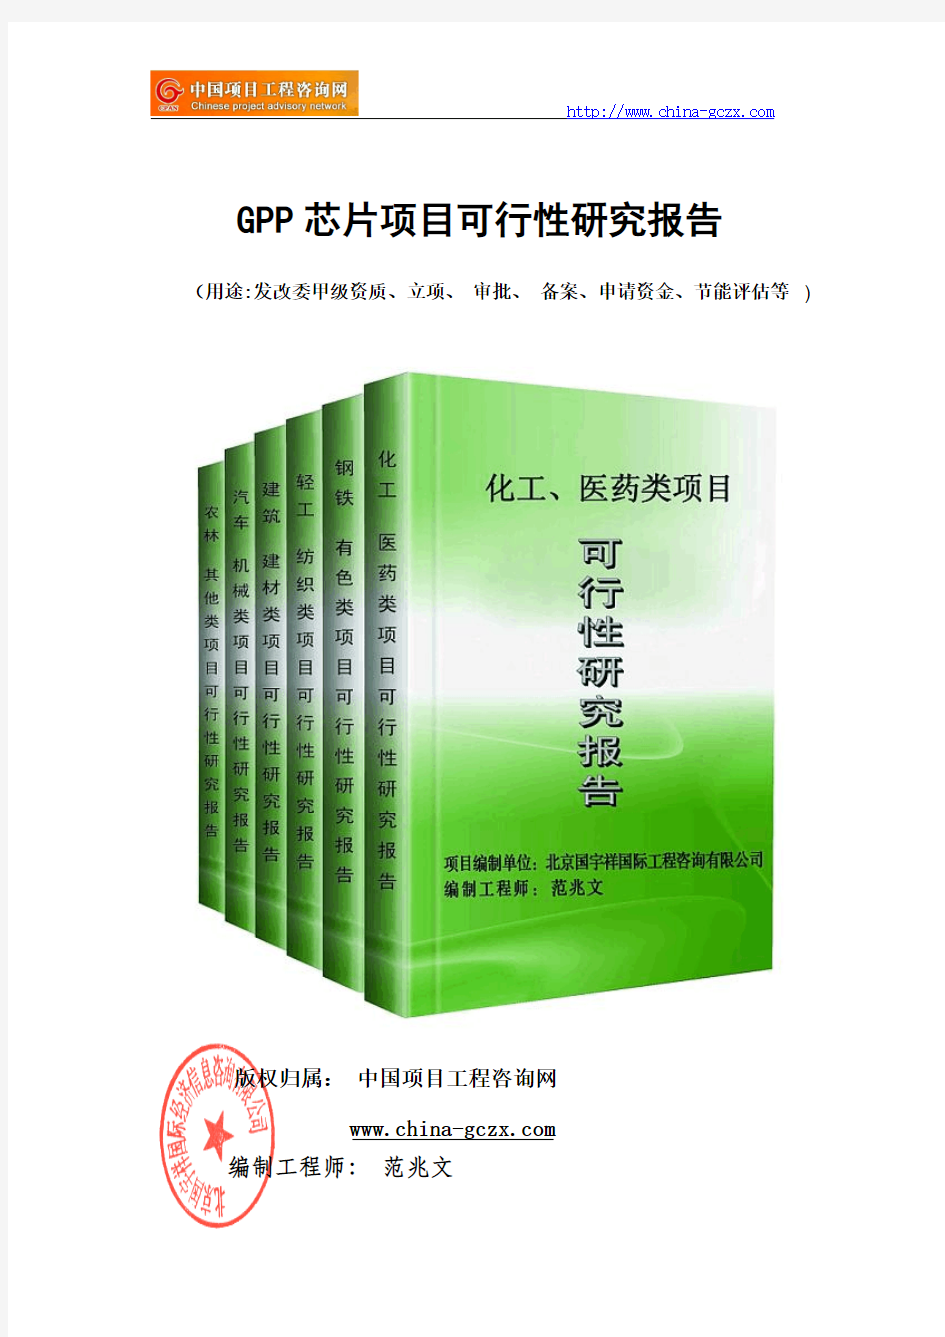 GPP芯片项目可行性研究报告(案例模板)